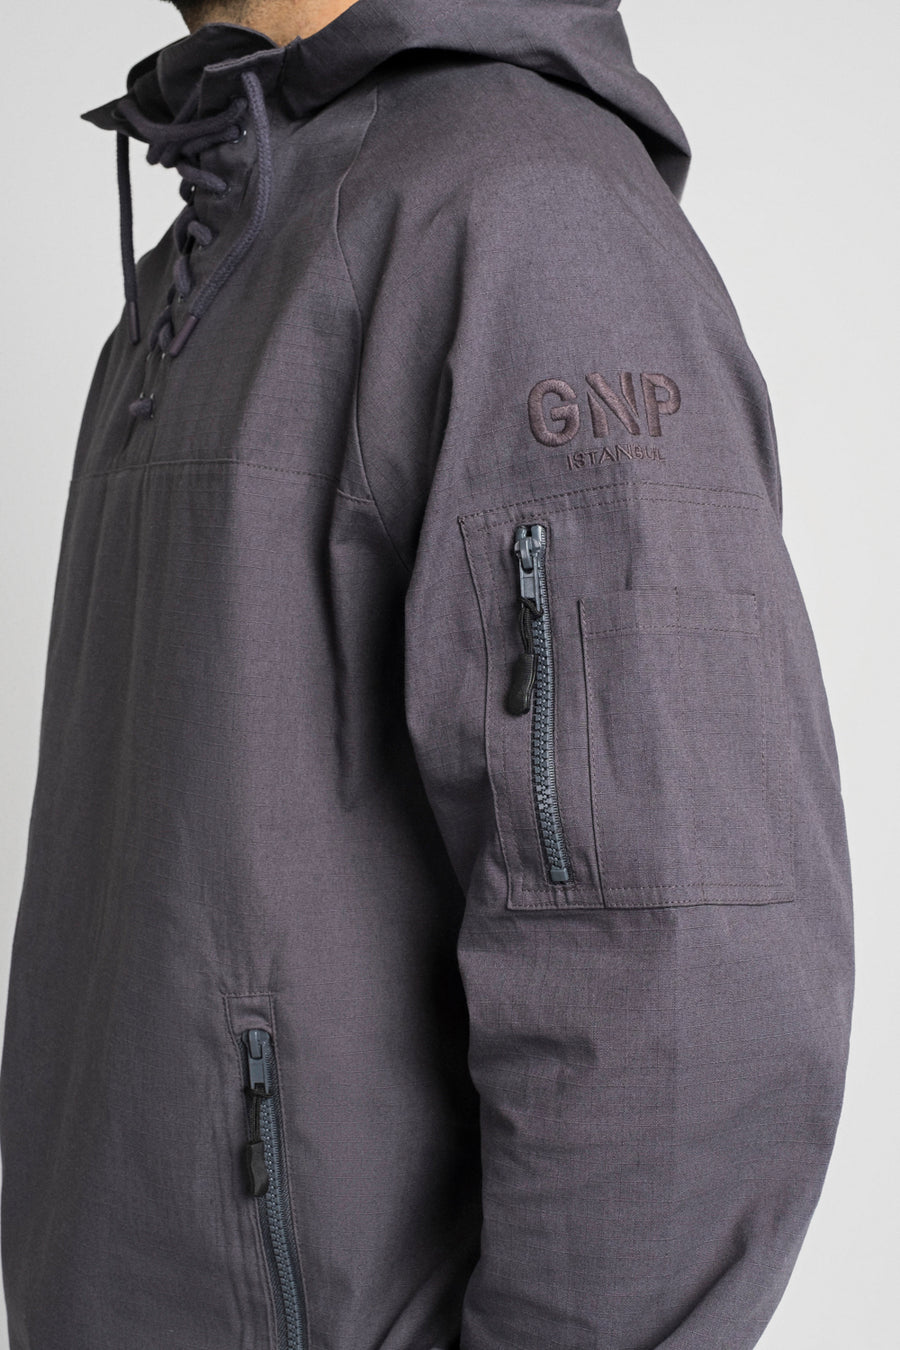 Woven Multi Pocket Sweatshirt and Cargo Trouser Set